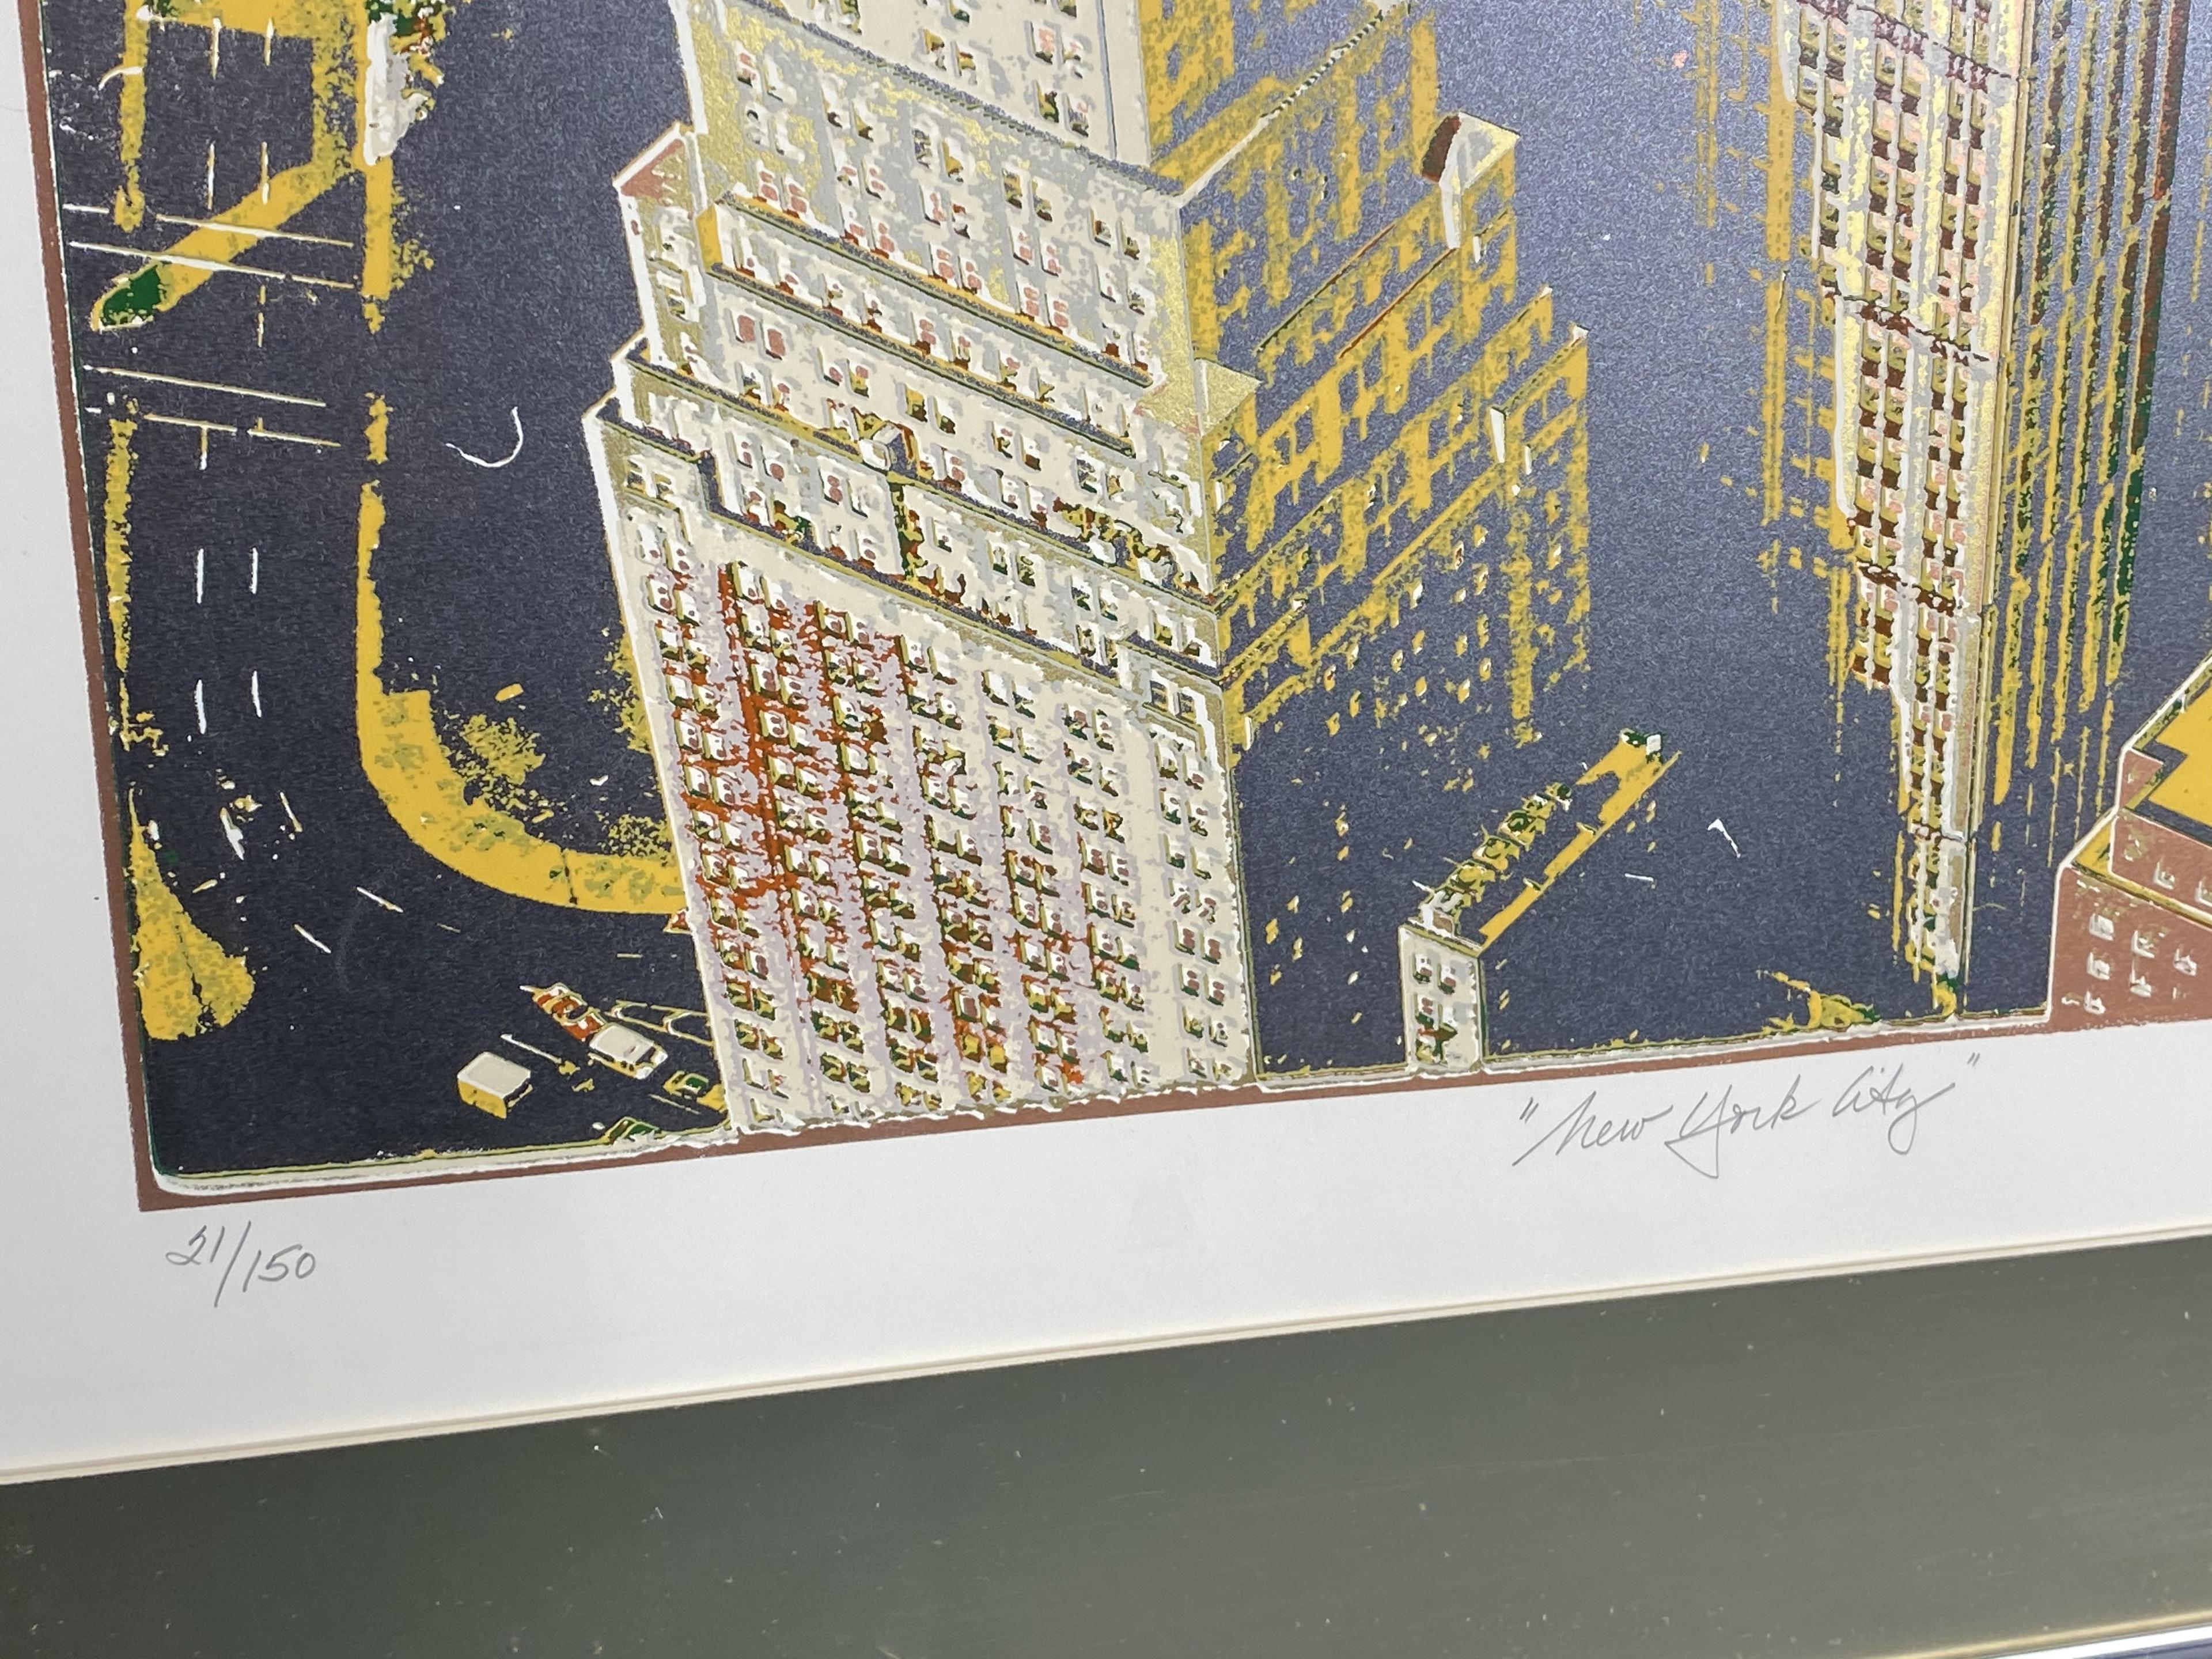 2 New York City Silkscreen prints by Jacqueline Tuteur.